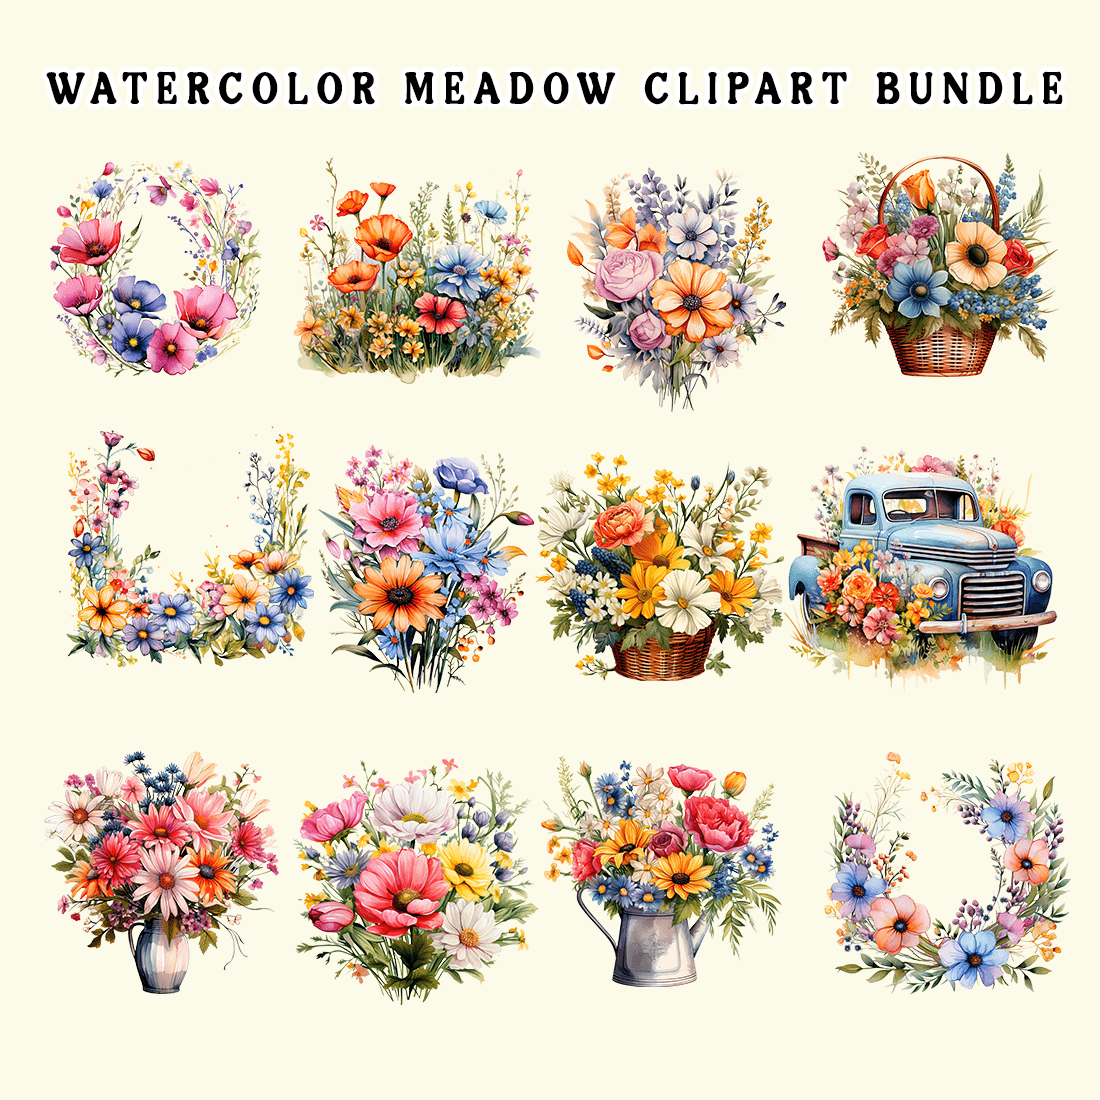 Watercolor Meadow Clipart Bundle preview image.